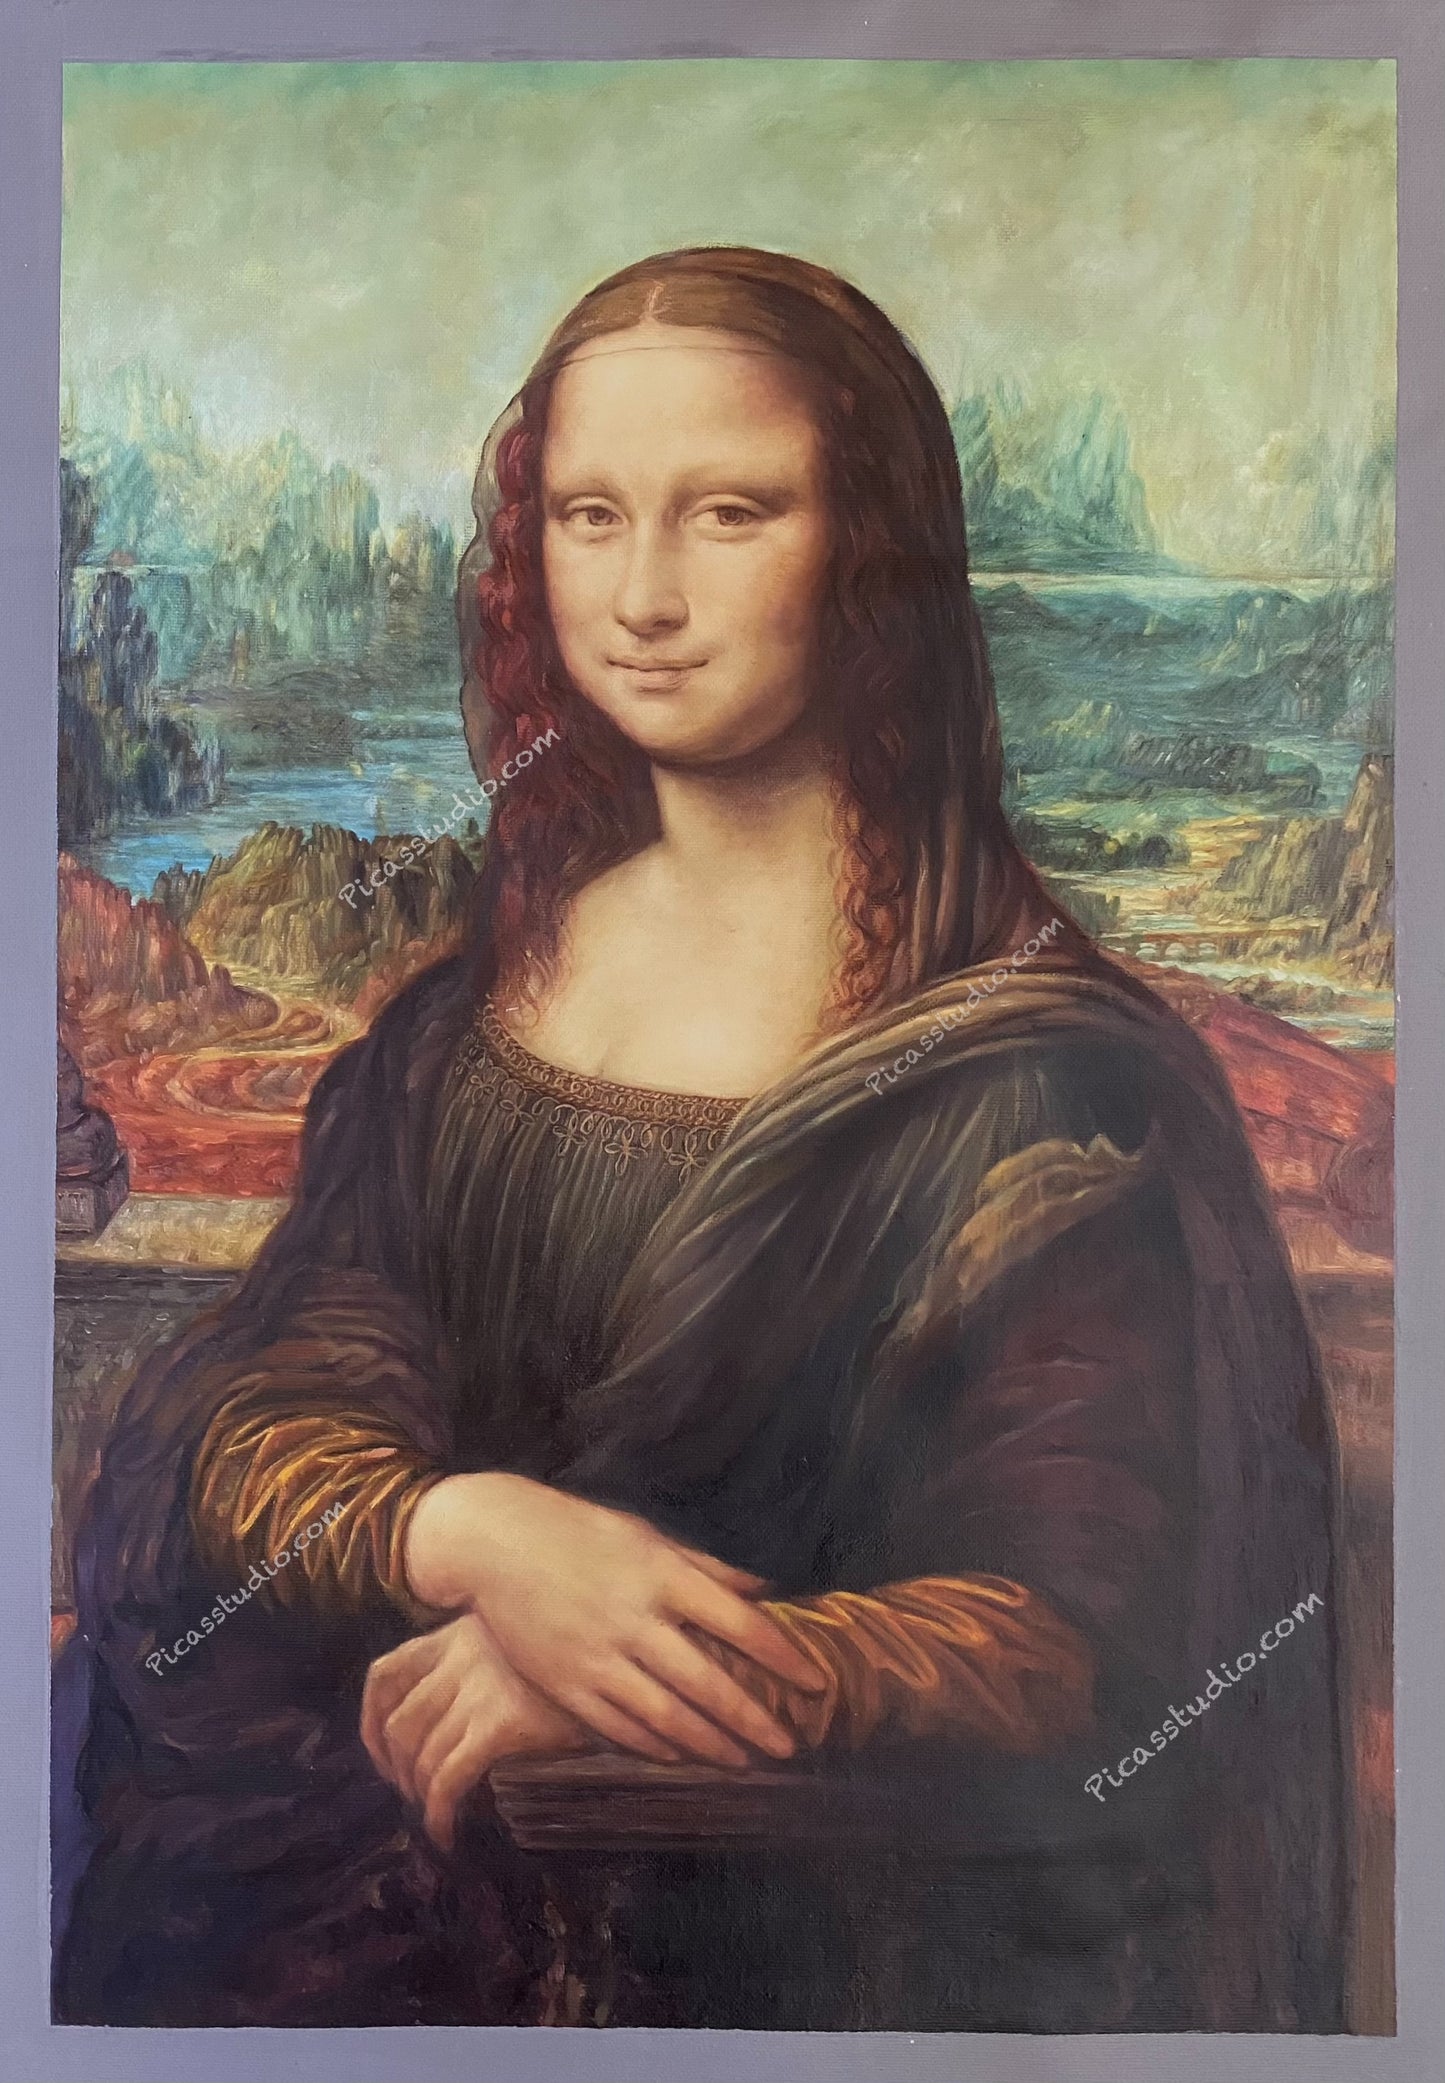 Mona Lisa by Leonardo da Vinci Oil Painting Hand Painted Art on Canvas Wall Decor Unframed